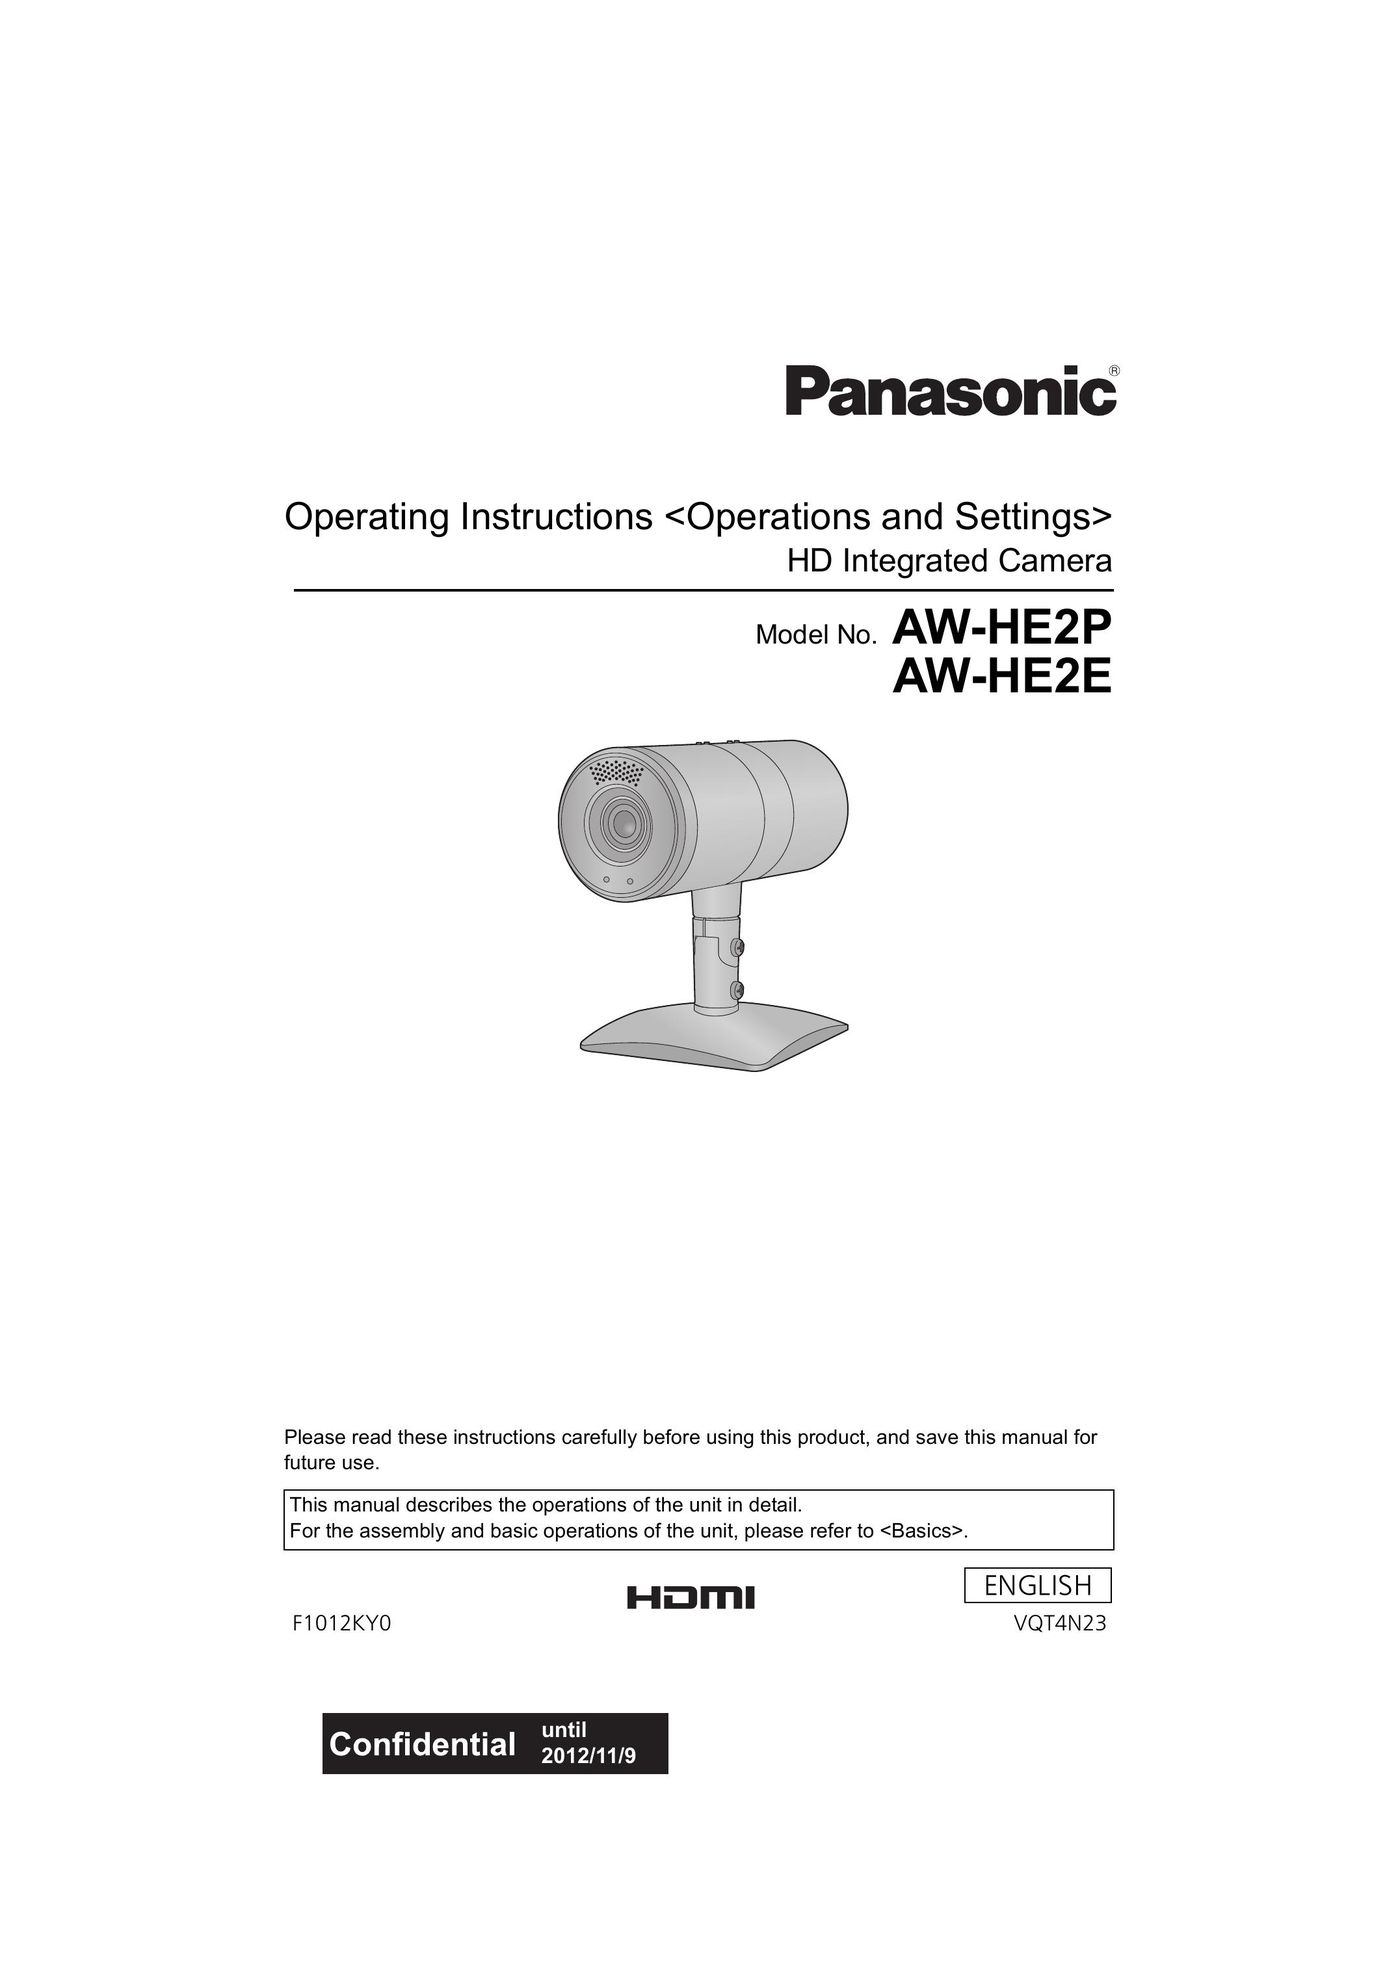 Panasonic panasonic hd integrated camera Home Security System User Manual